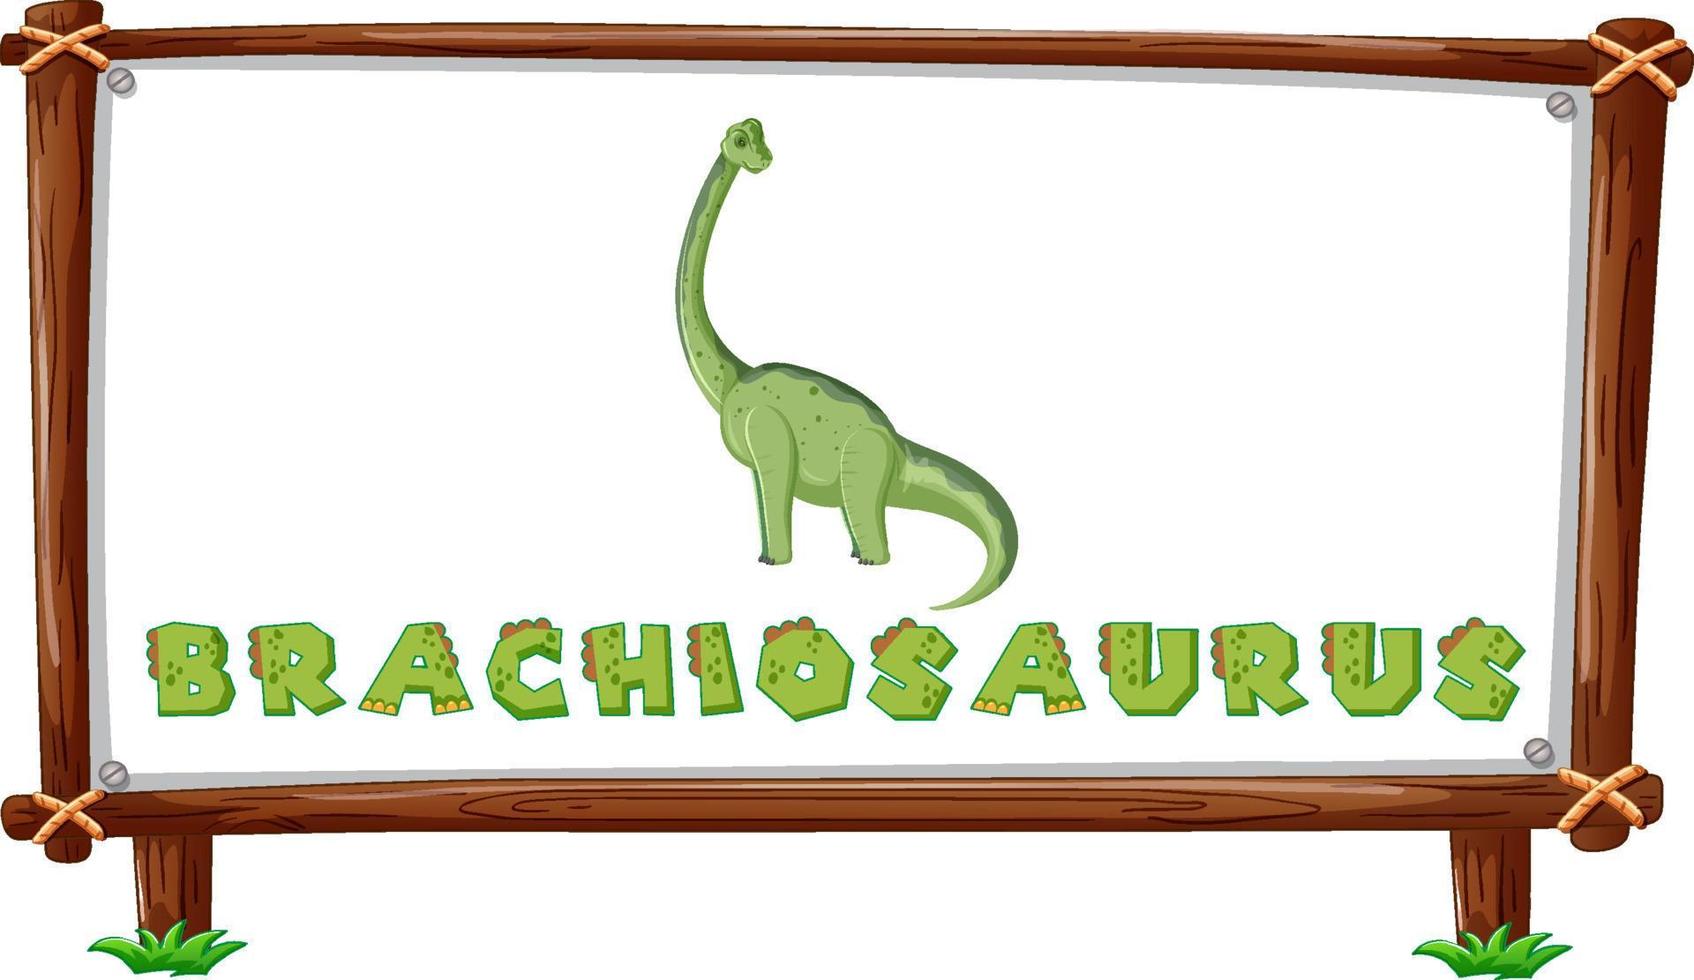 plantilla de marco con dinosaurios y diseño de braquiosaurio de texto dentro vector